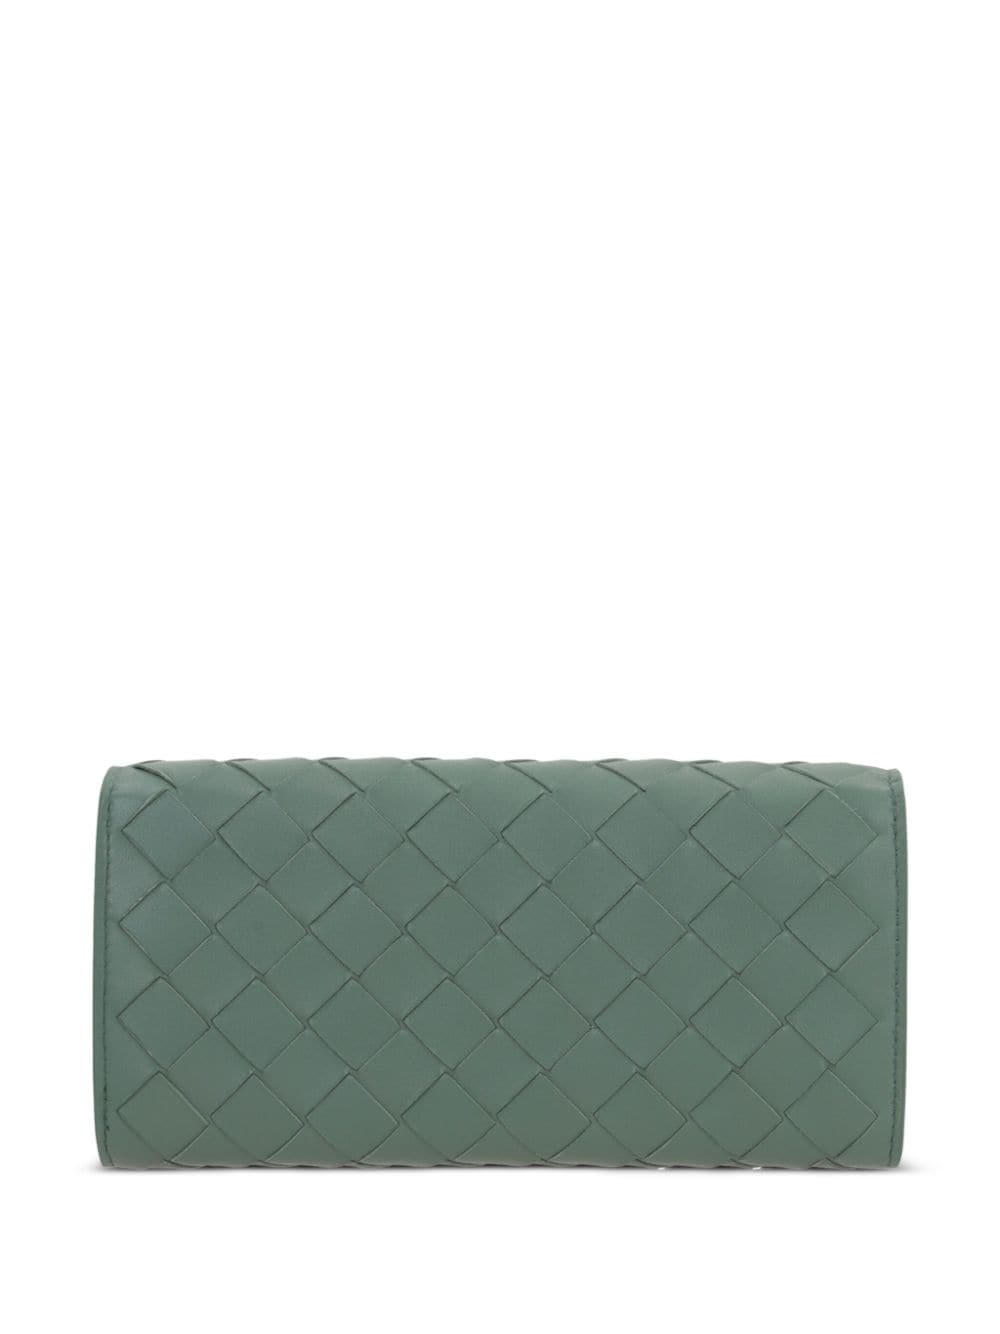 Bottega Veneta Continental Intrecciato leather wallet - Groen